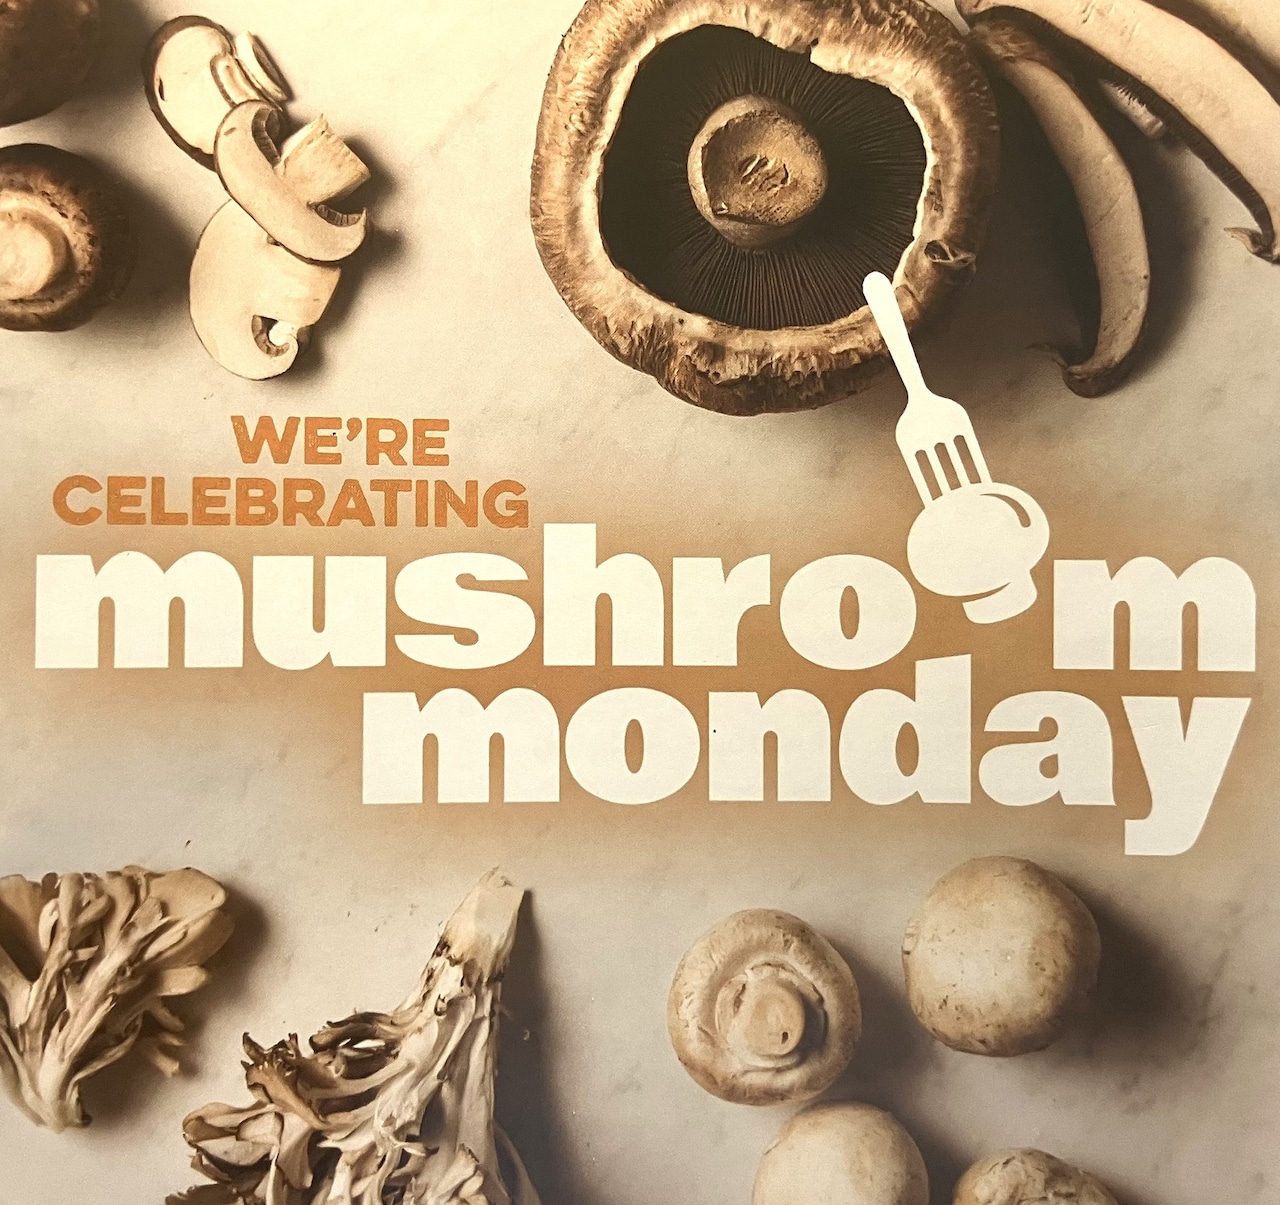 Mushroom Monday under way in NE Ohio restaurants in July [Video]